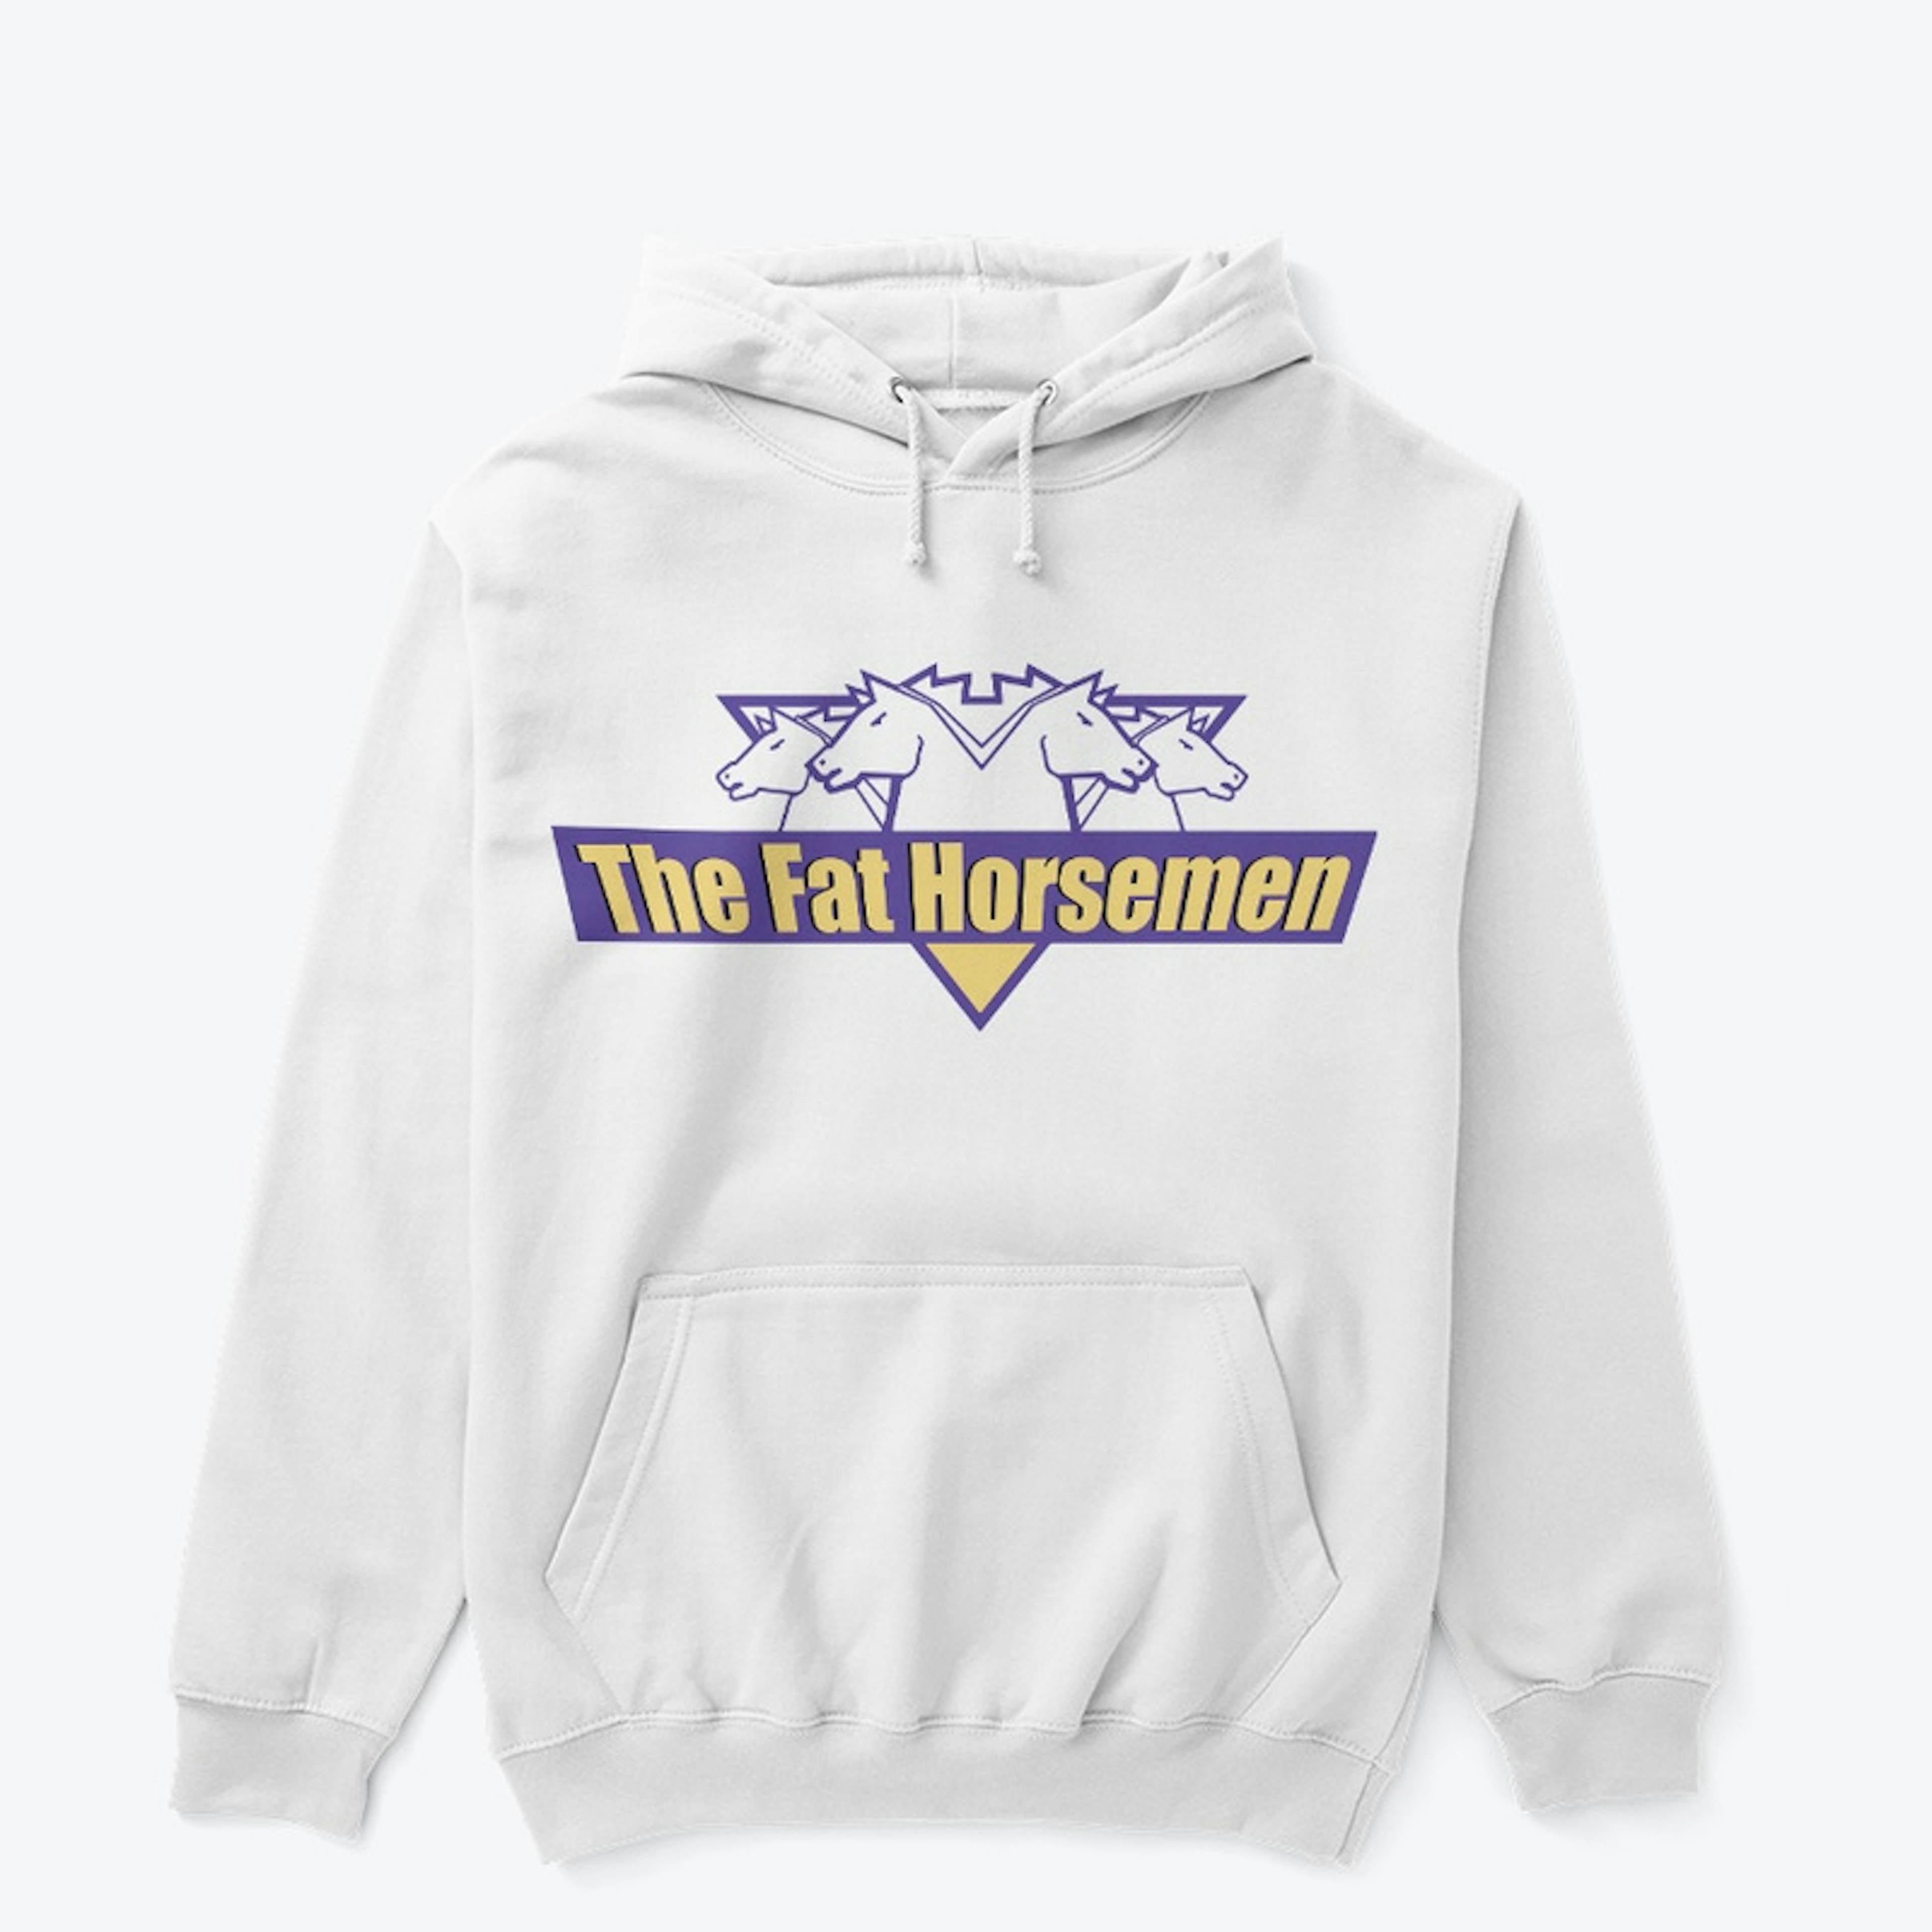 The Fat Horsemen Part One!